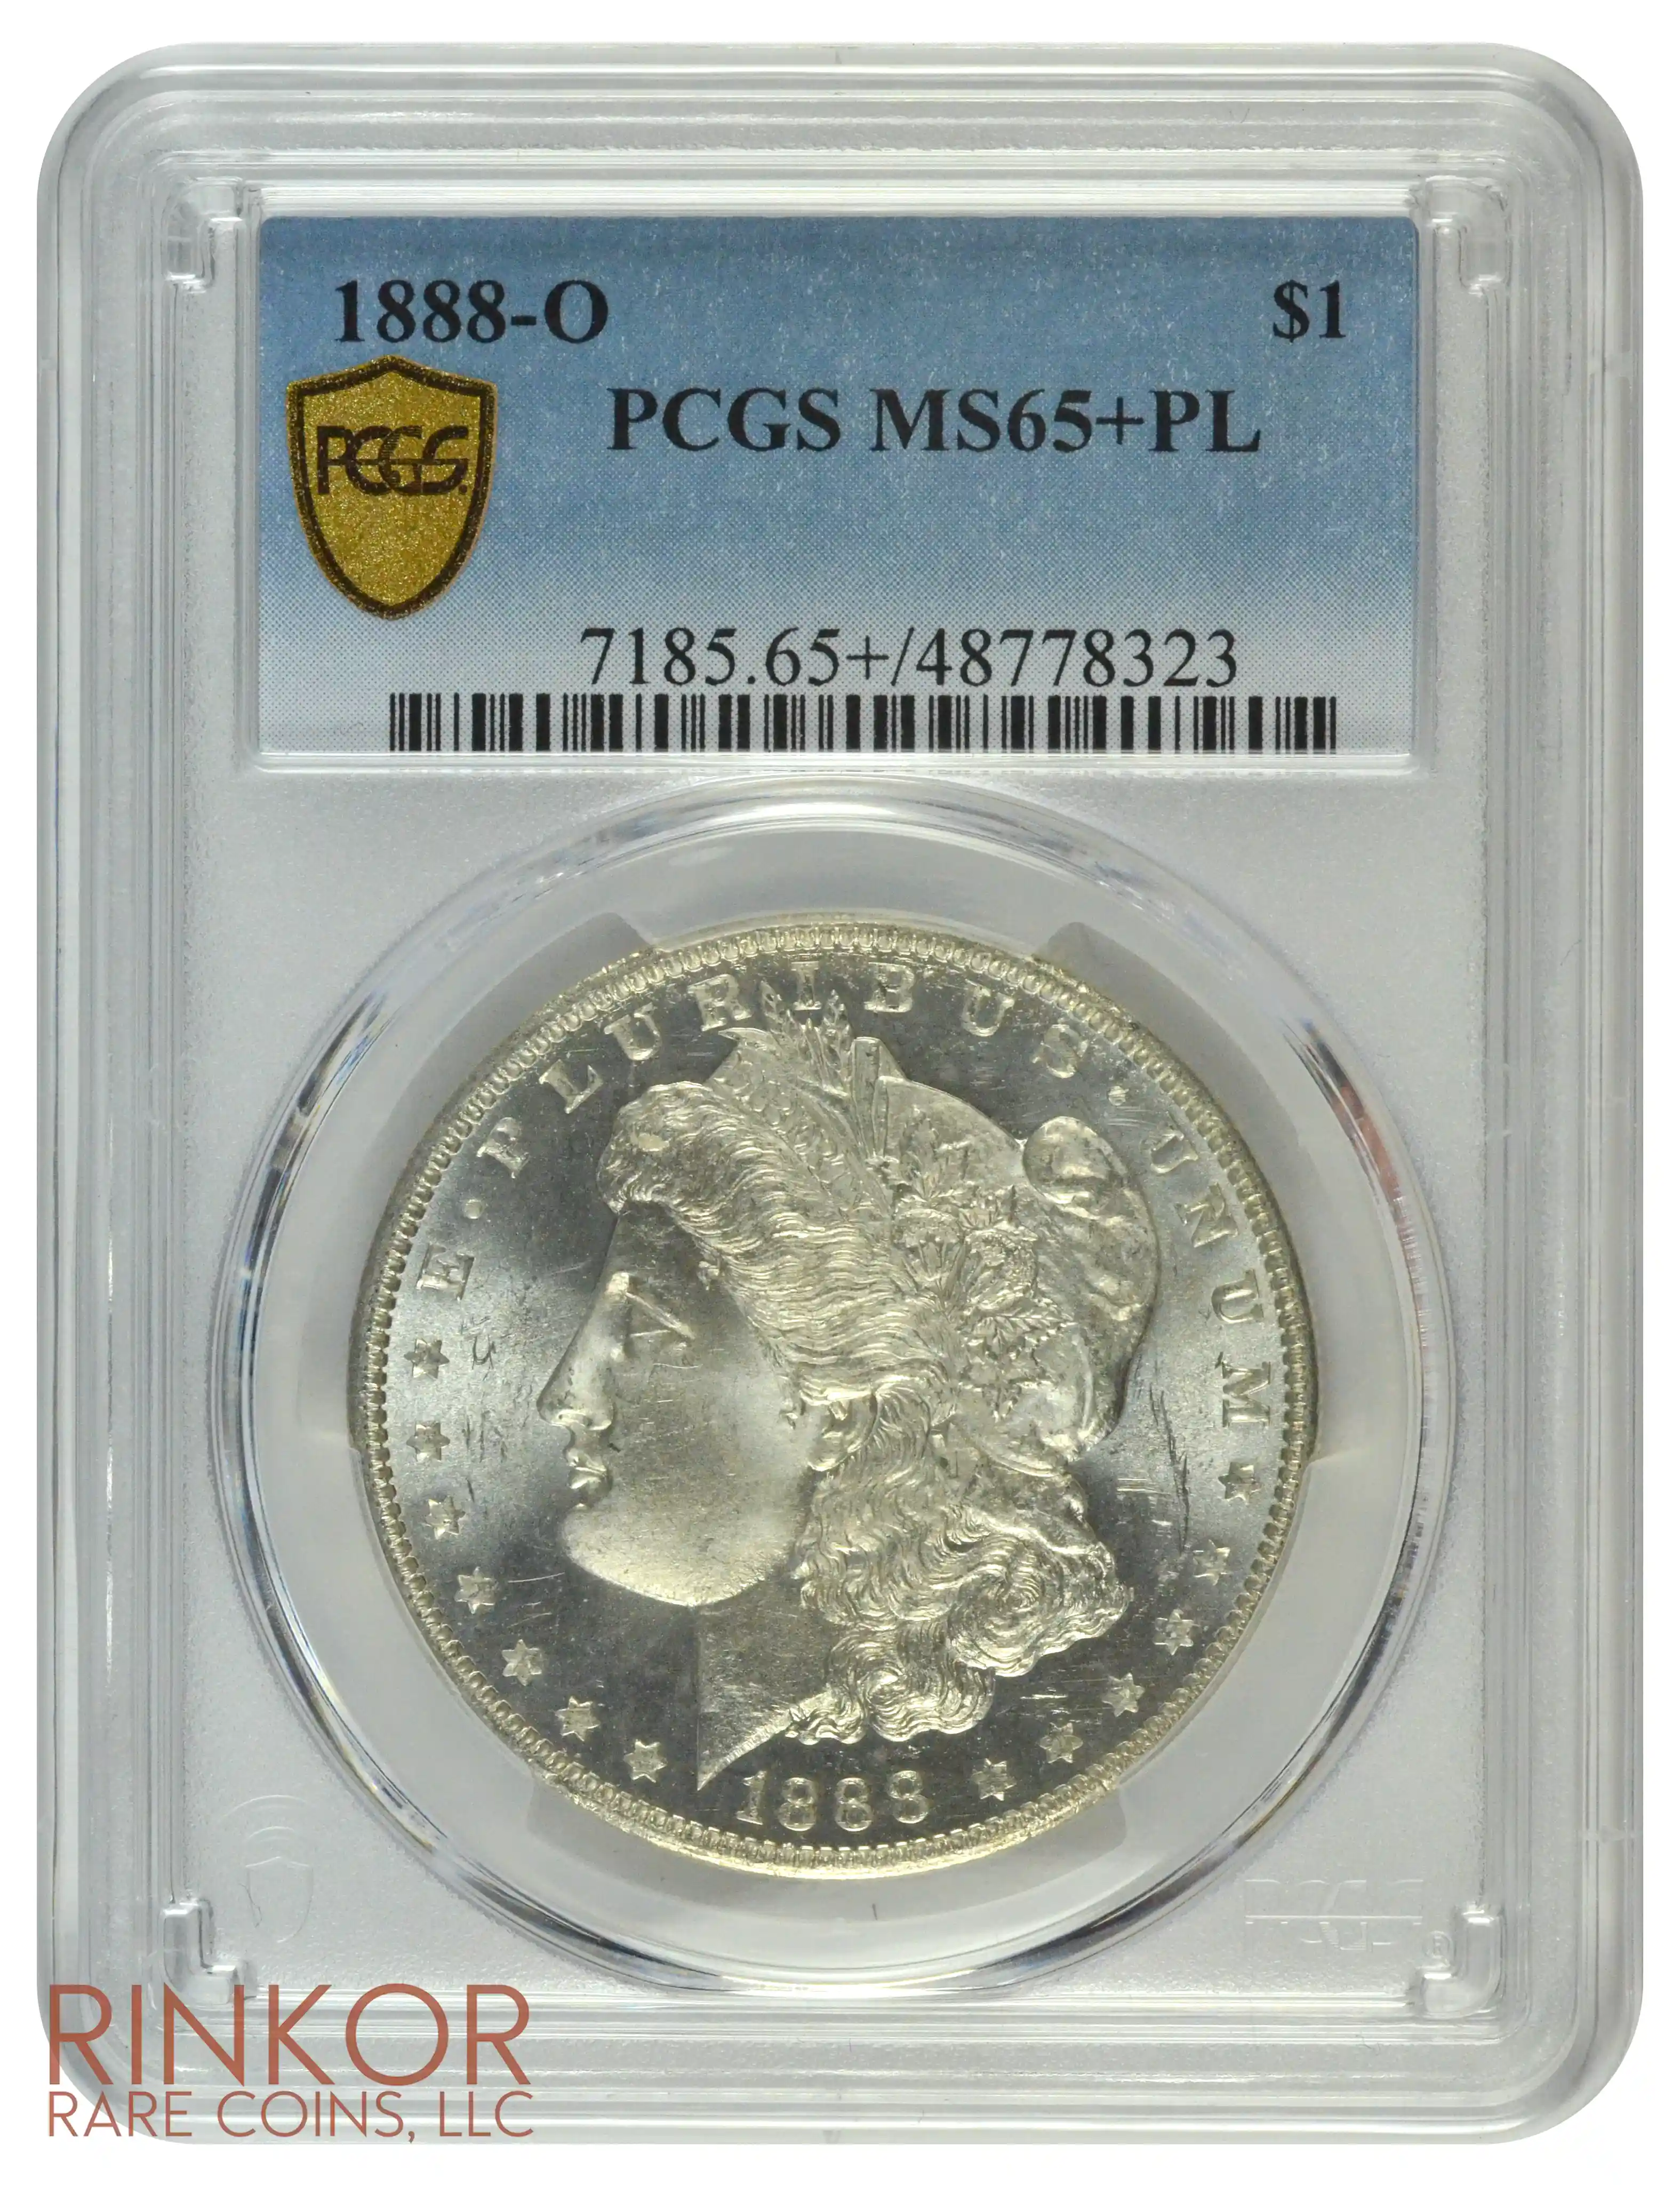 1888-O $1 PCGS MS 65+ PL